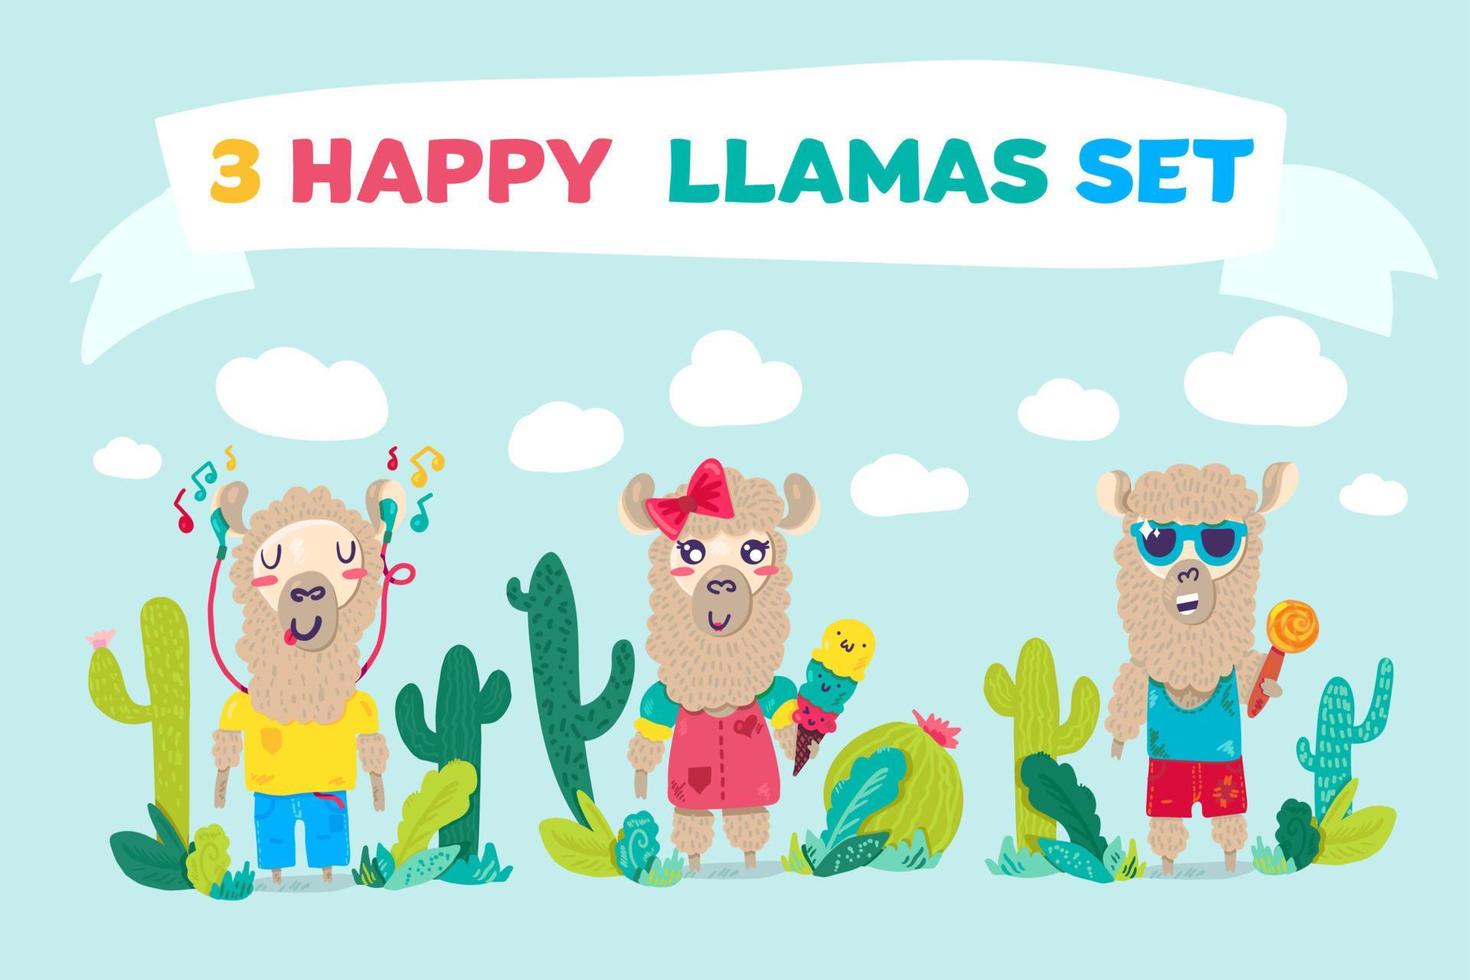 Happy llamas cartoon characters set vector